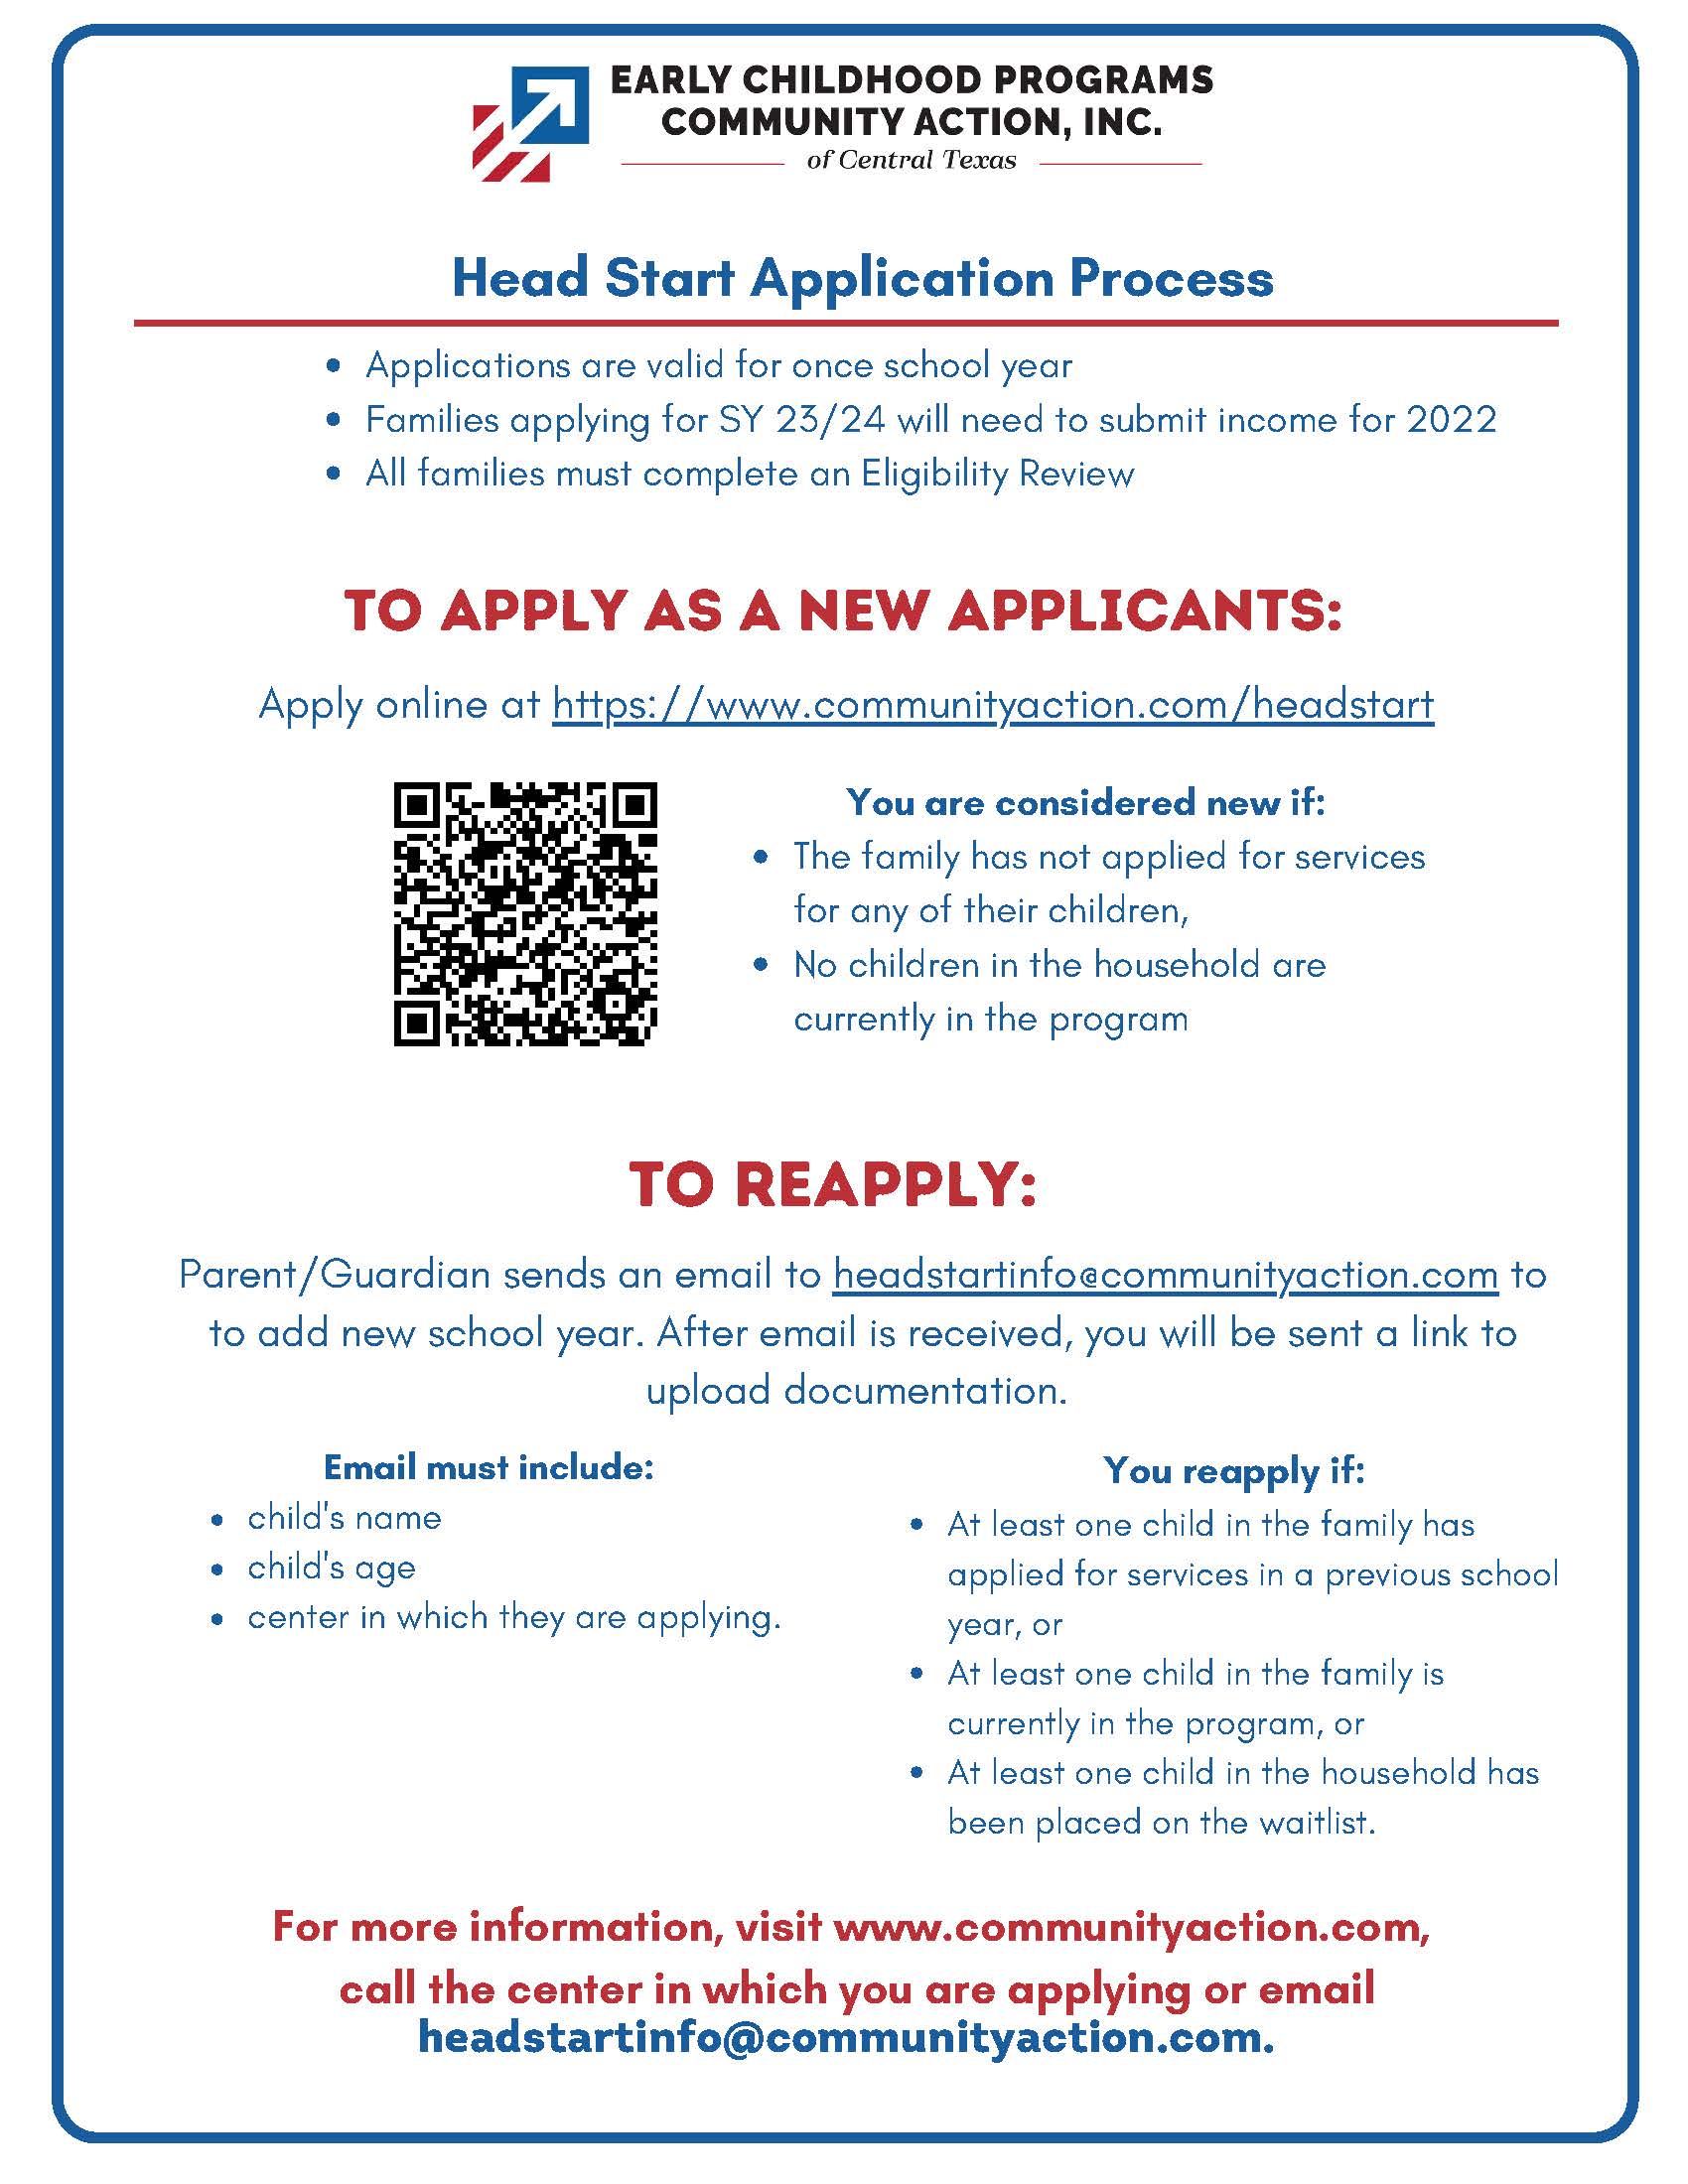 Head Start Annual Application Process 2023-2024